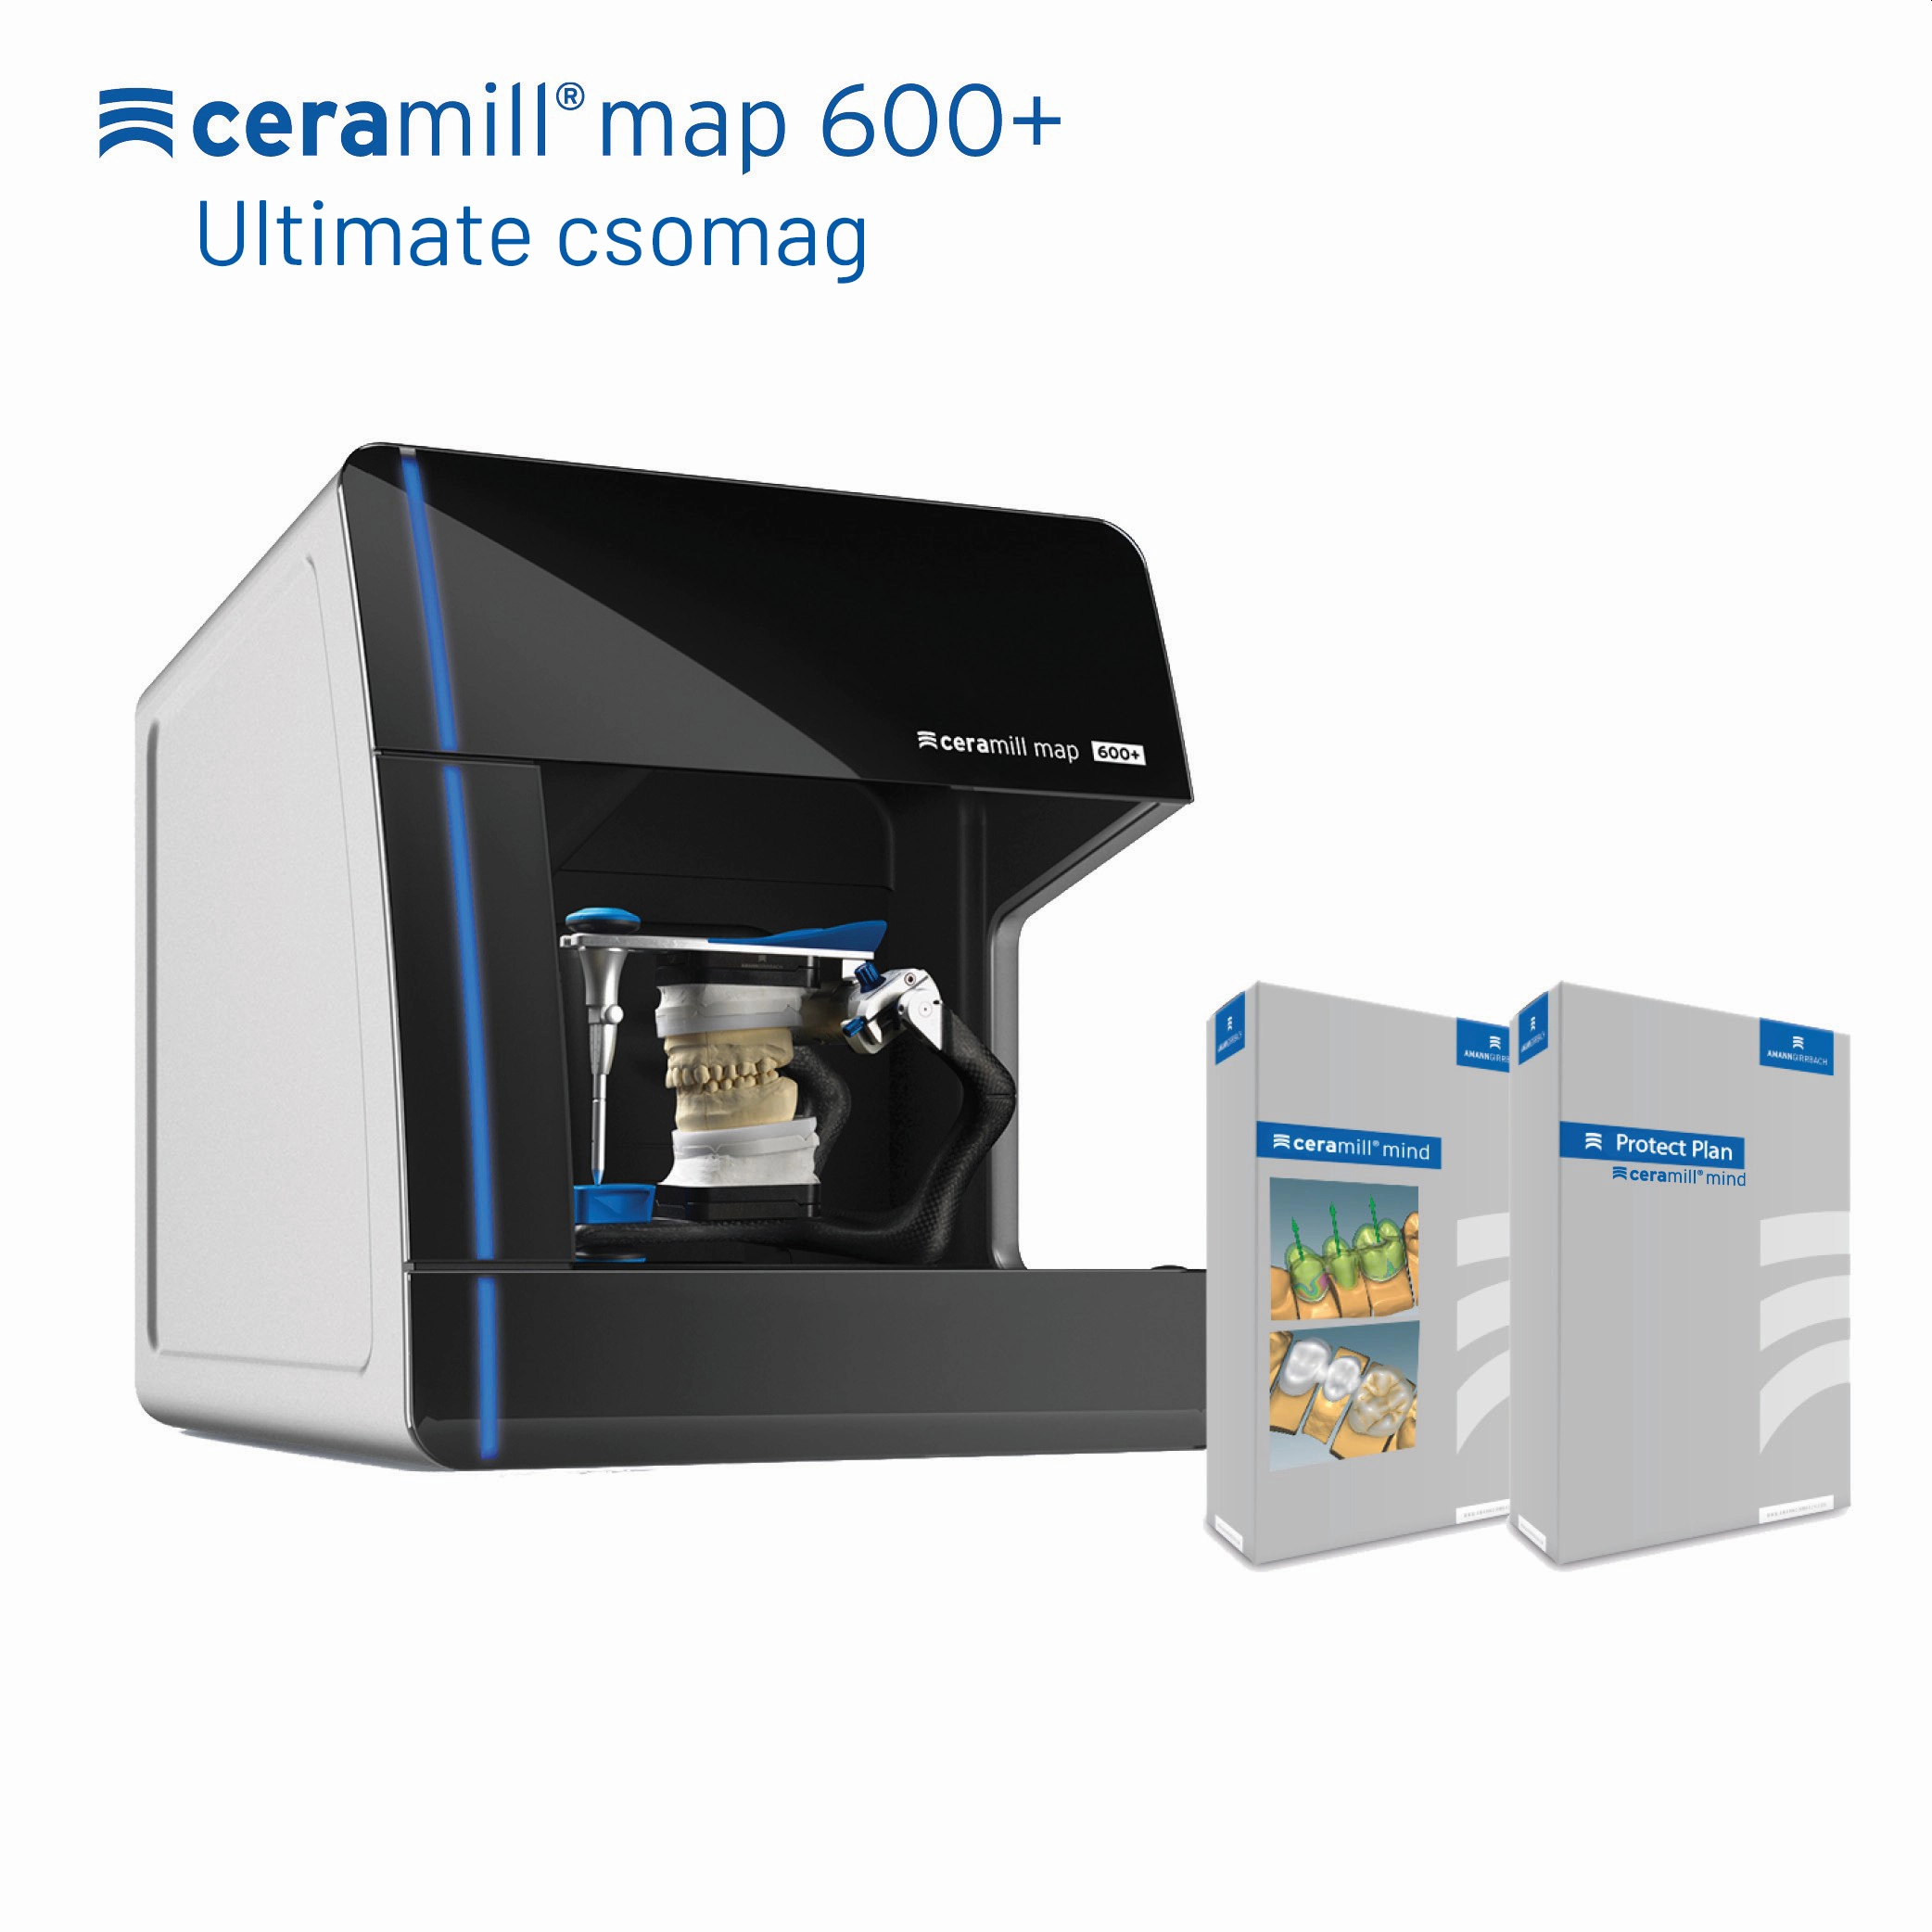 Ceramill Map600+ Ultimate csomag